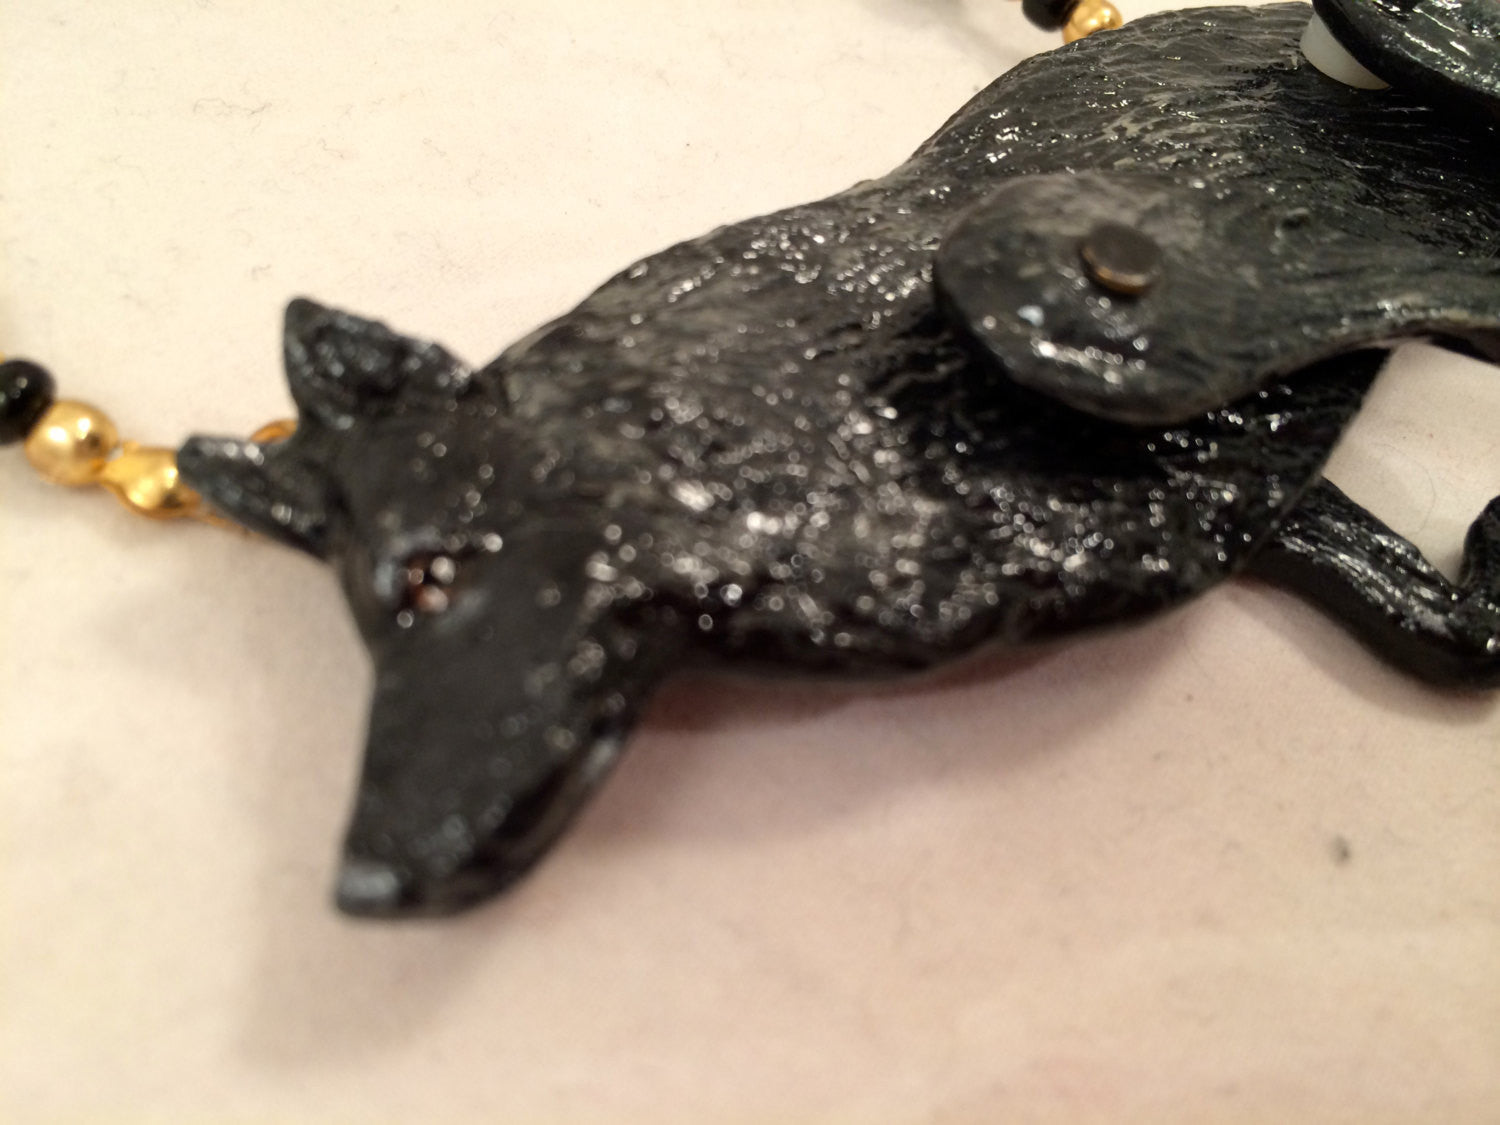 Dorian Designs Necklace Wolf Pendant